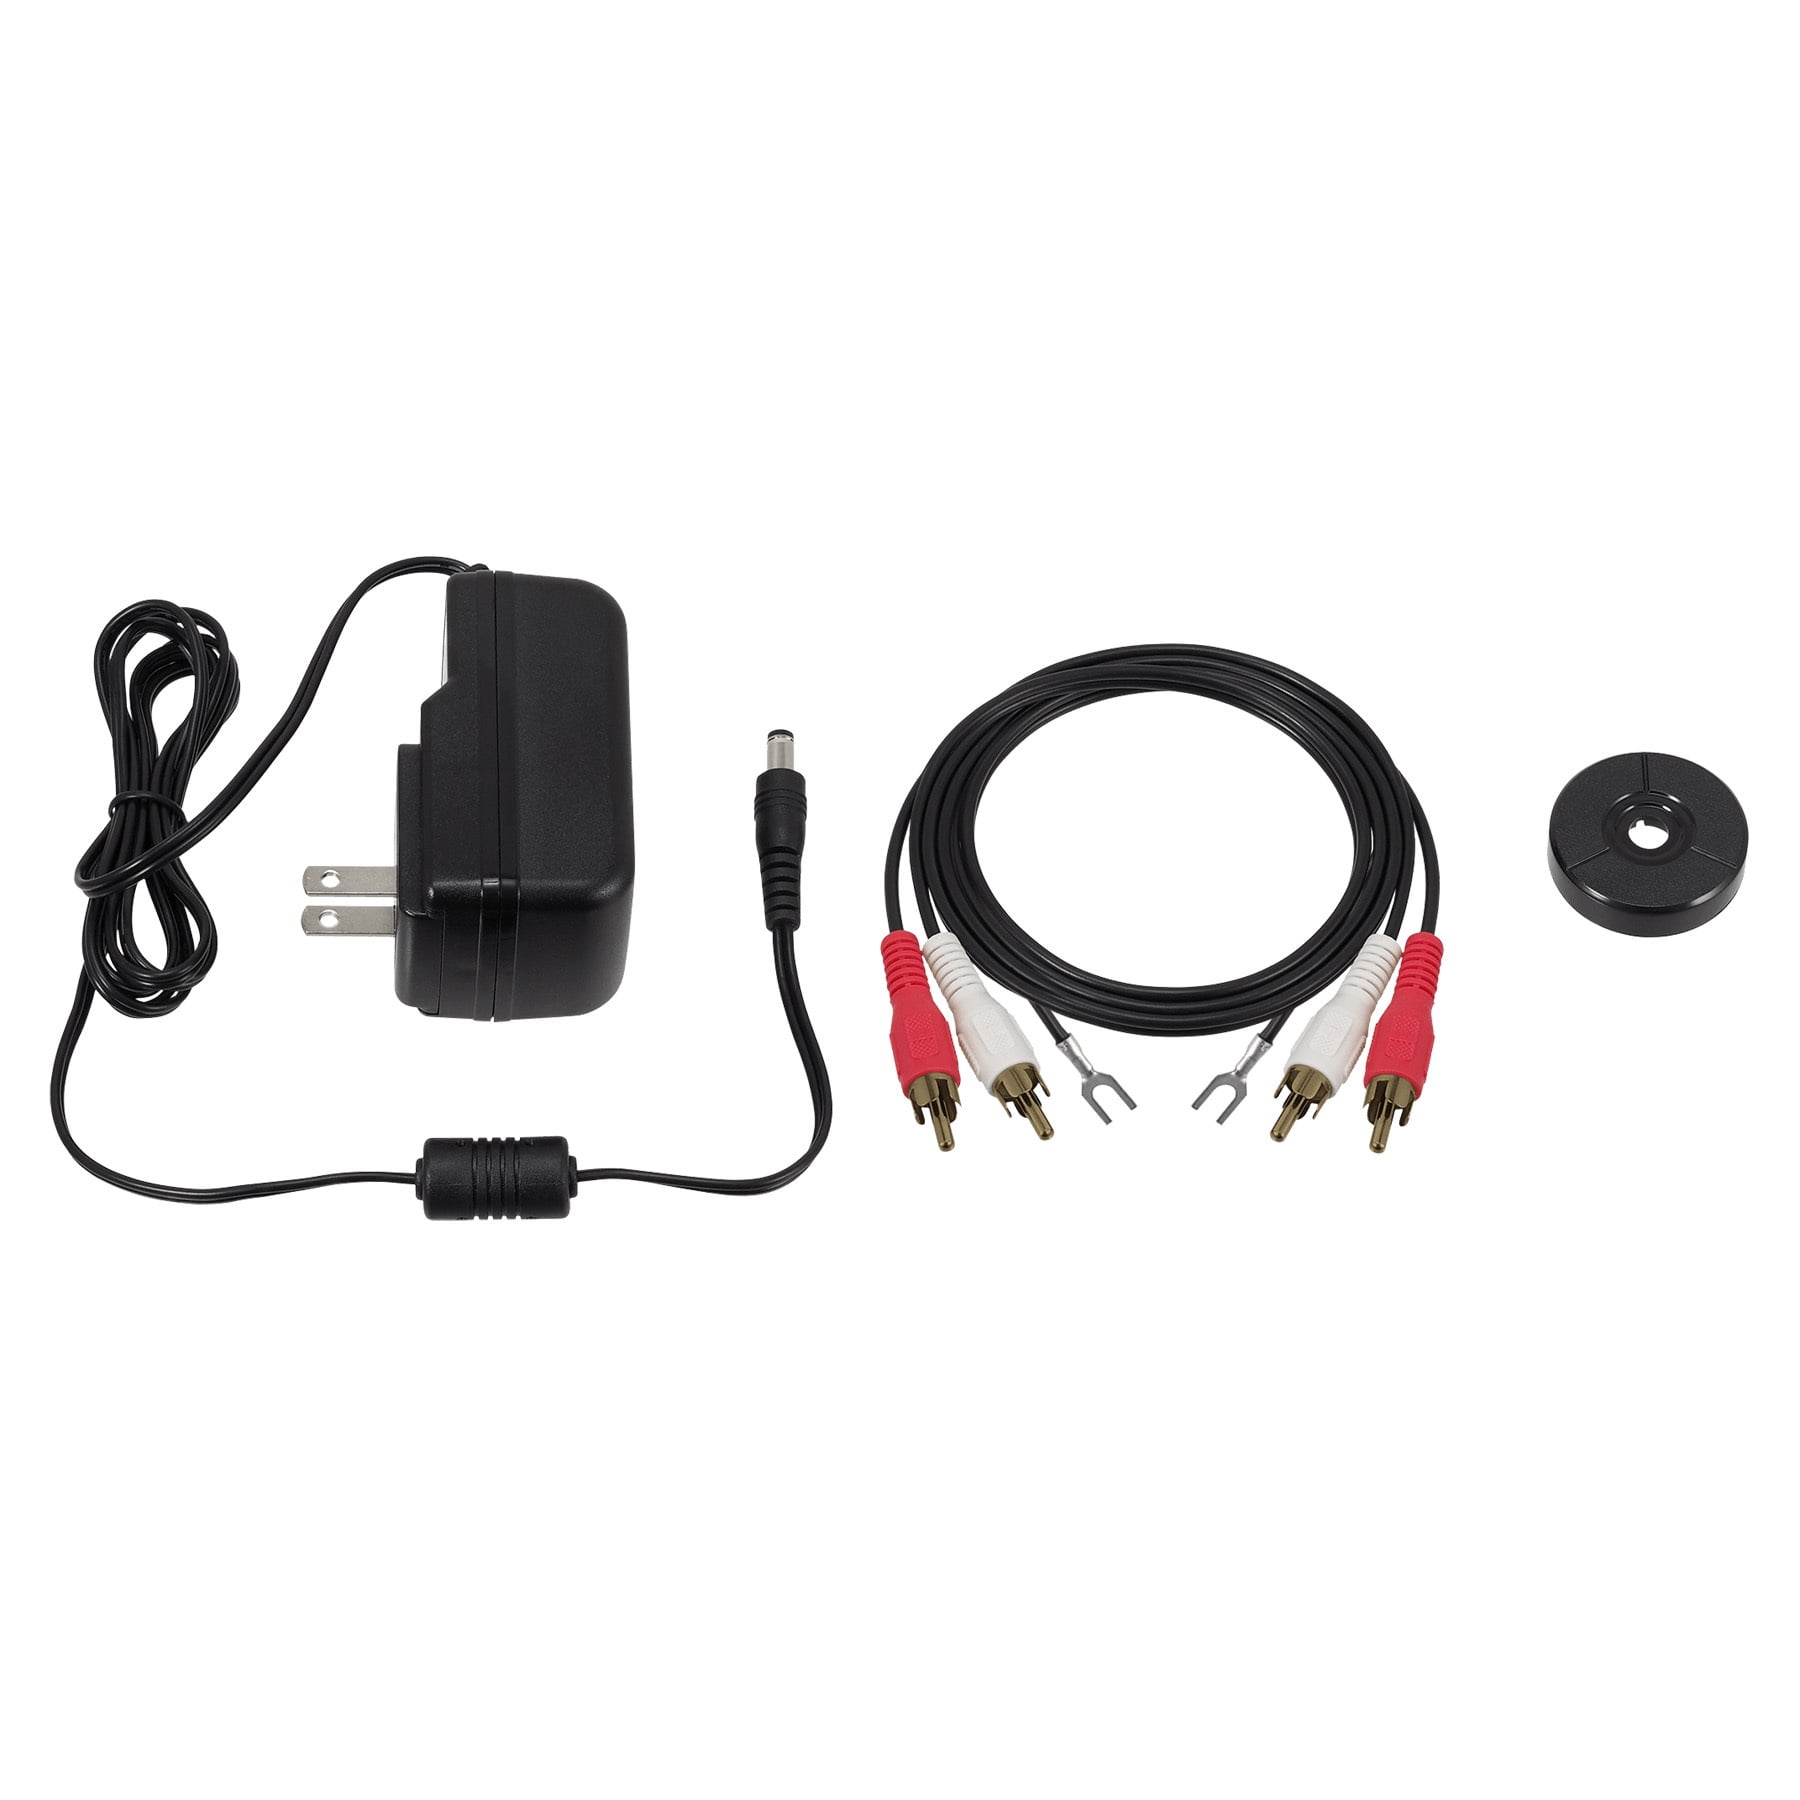 Audio-Technica AT-LP120XUSB-BK Direct Drive Turntable with USB - Black,  audio technica lp120 